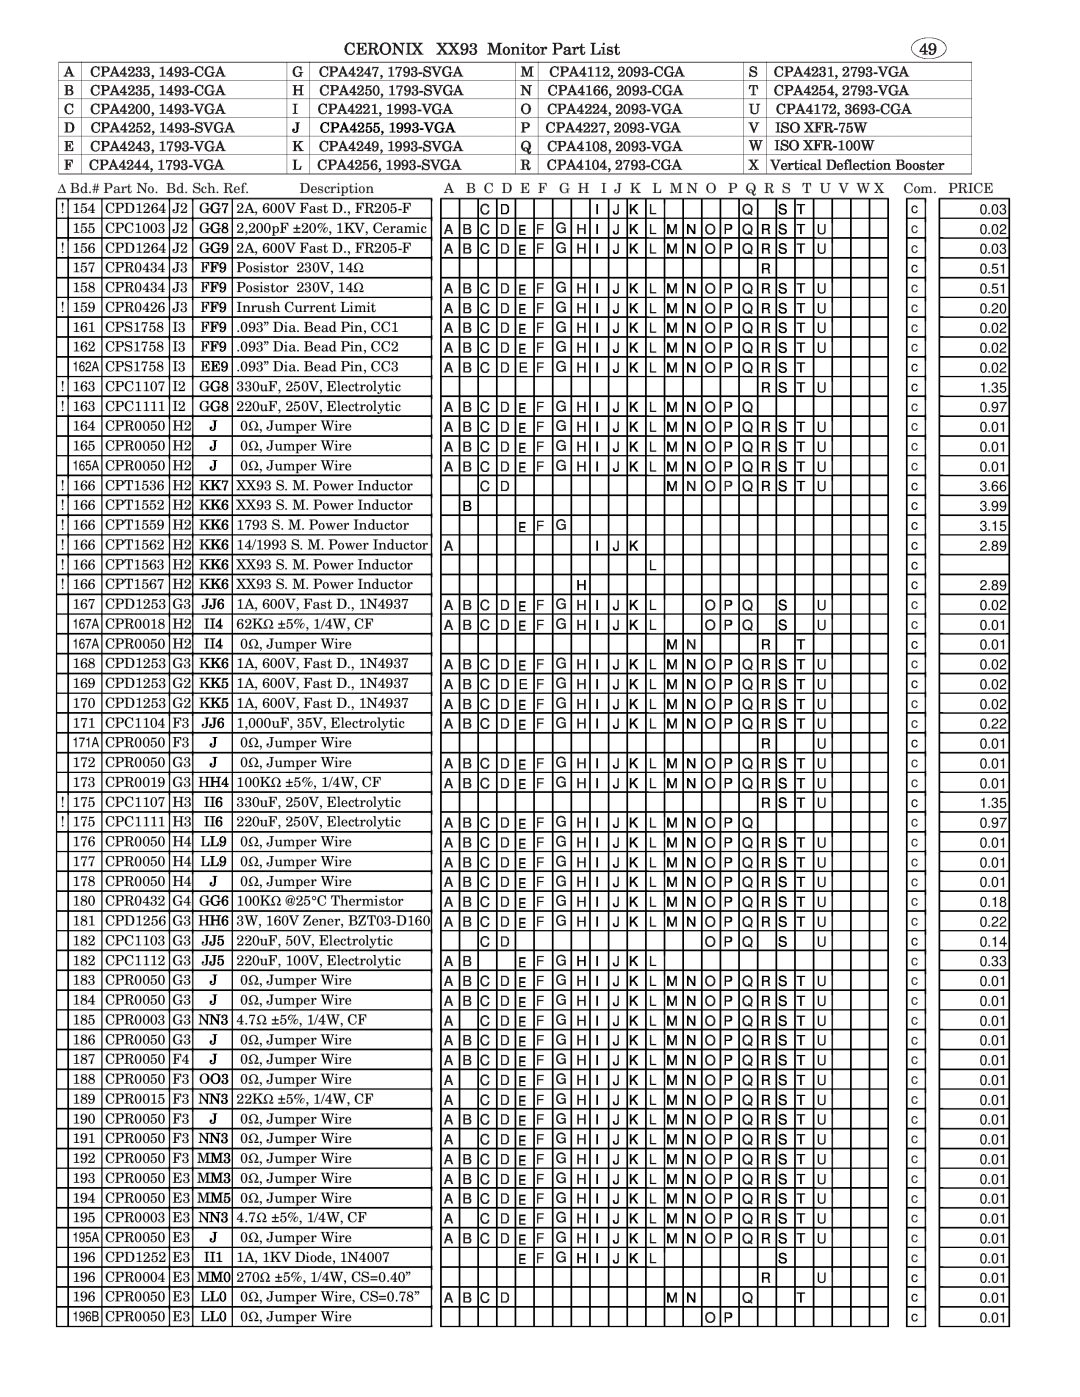 Genius 2093, ISO XFR-75W, 1493, 2793, 3693, 1793, 1993, ISO XFR-100W manual CERONIX XX93 Monitor Part List 